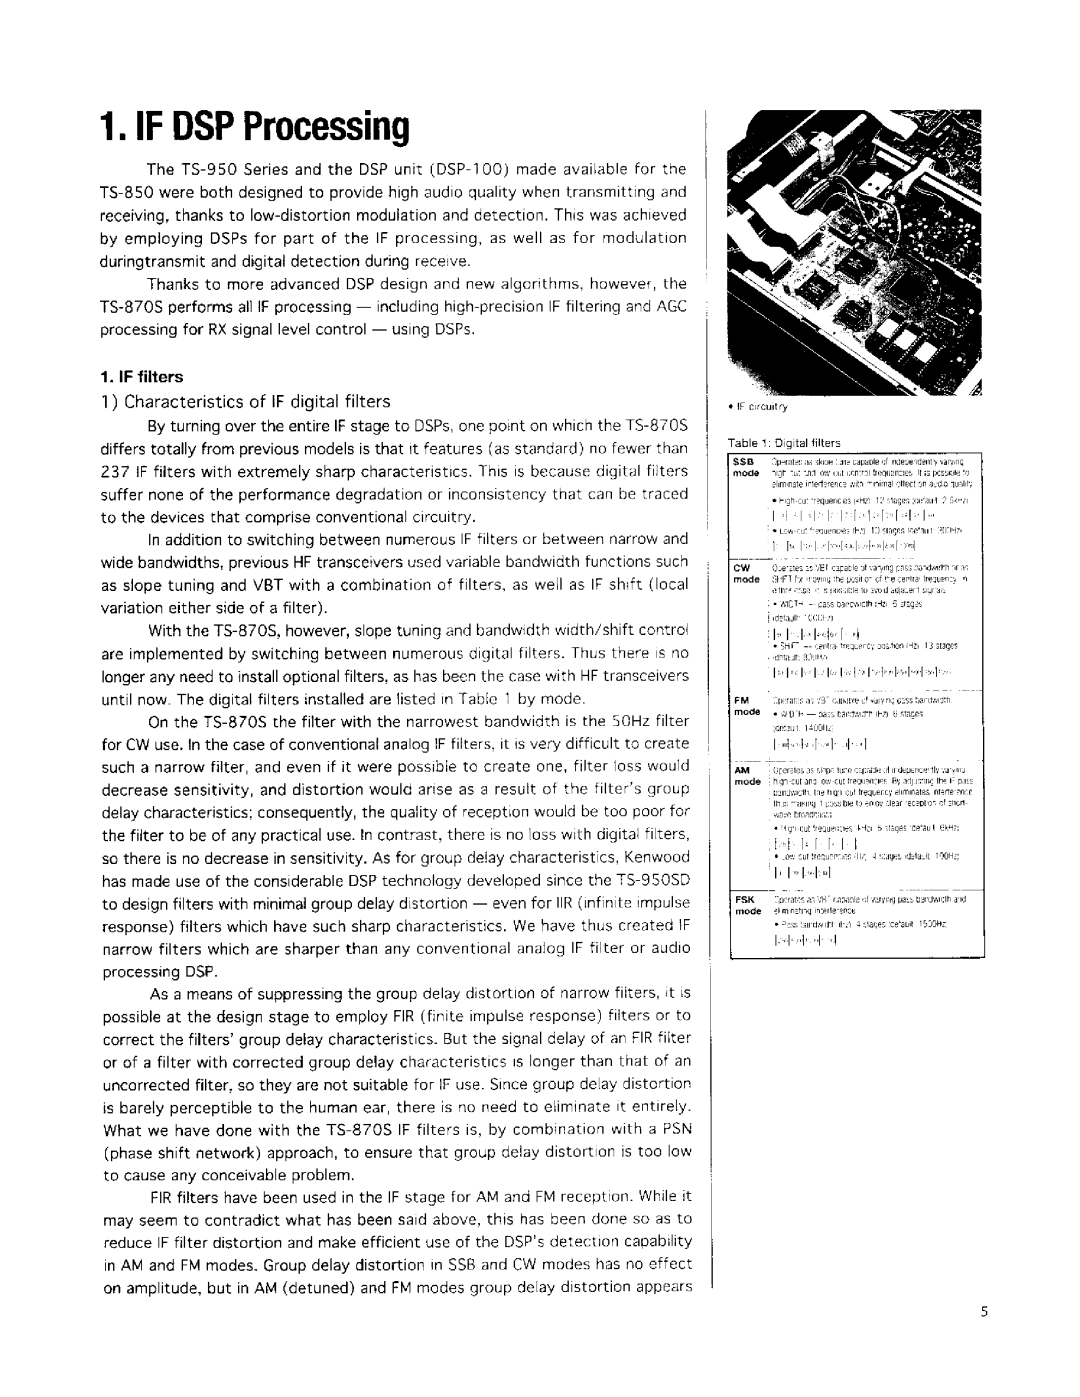 Kenwood TS-870S manual 